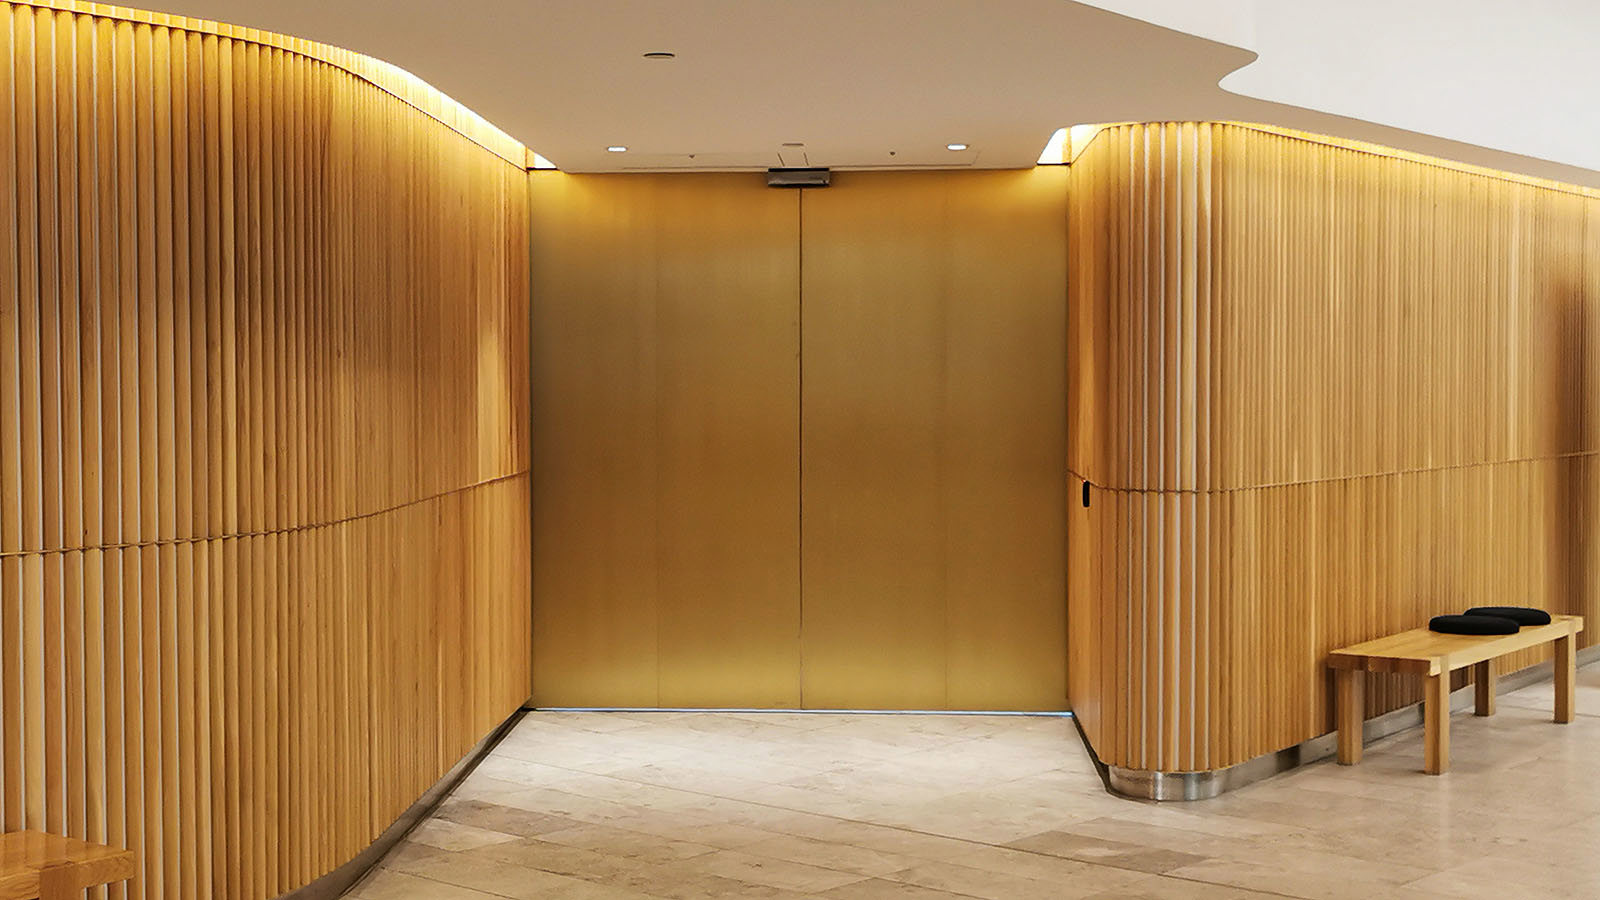 The entrances to the Qantas chairman's lounge are nondescript.